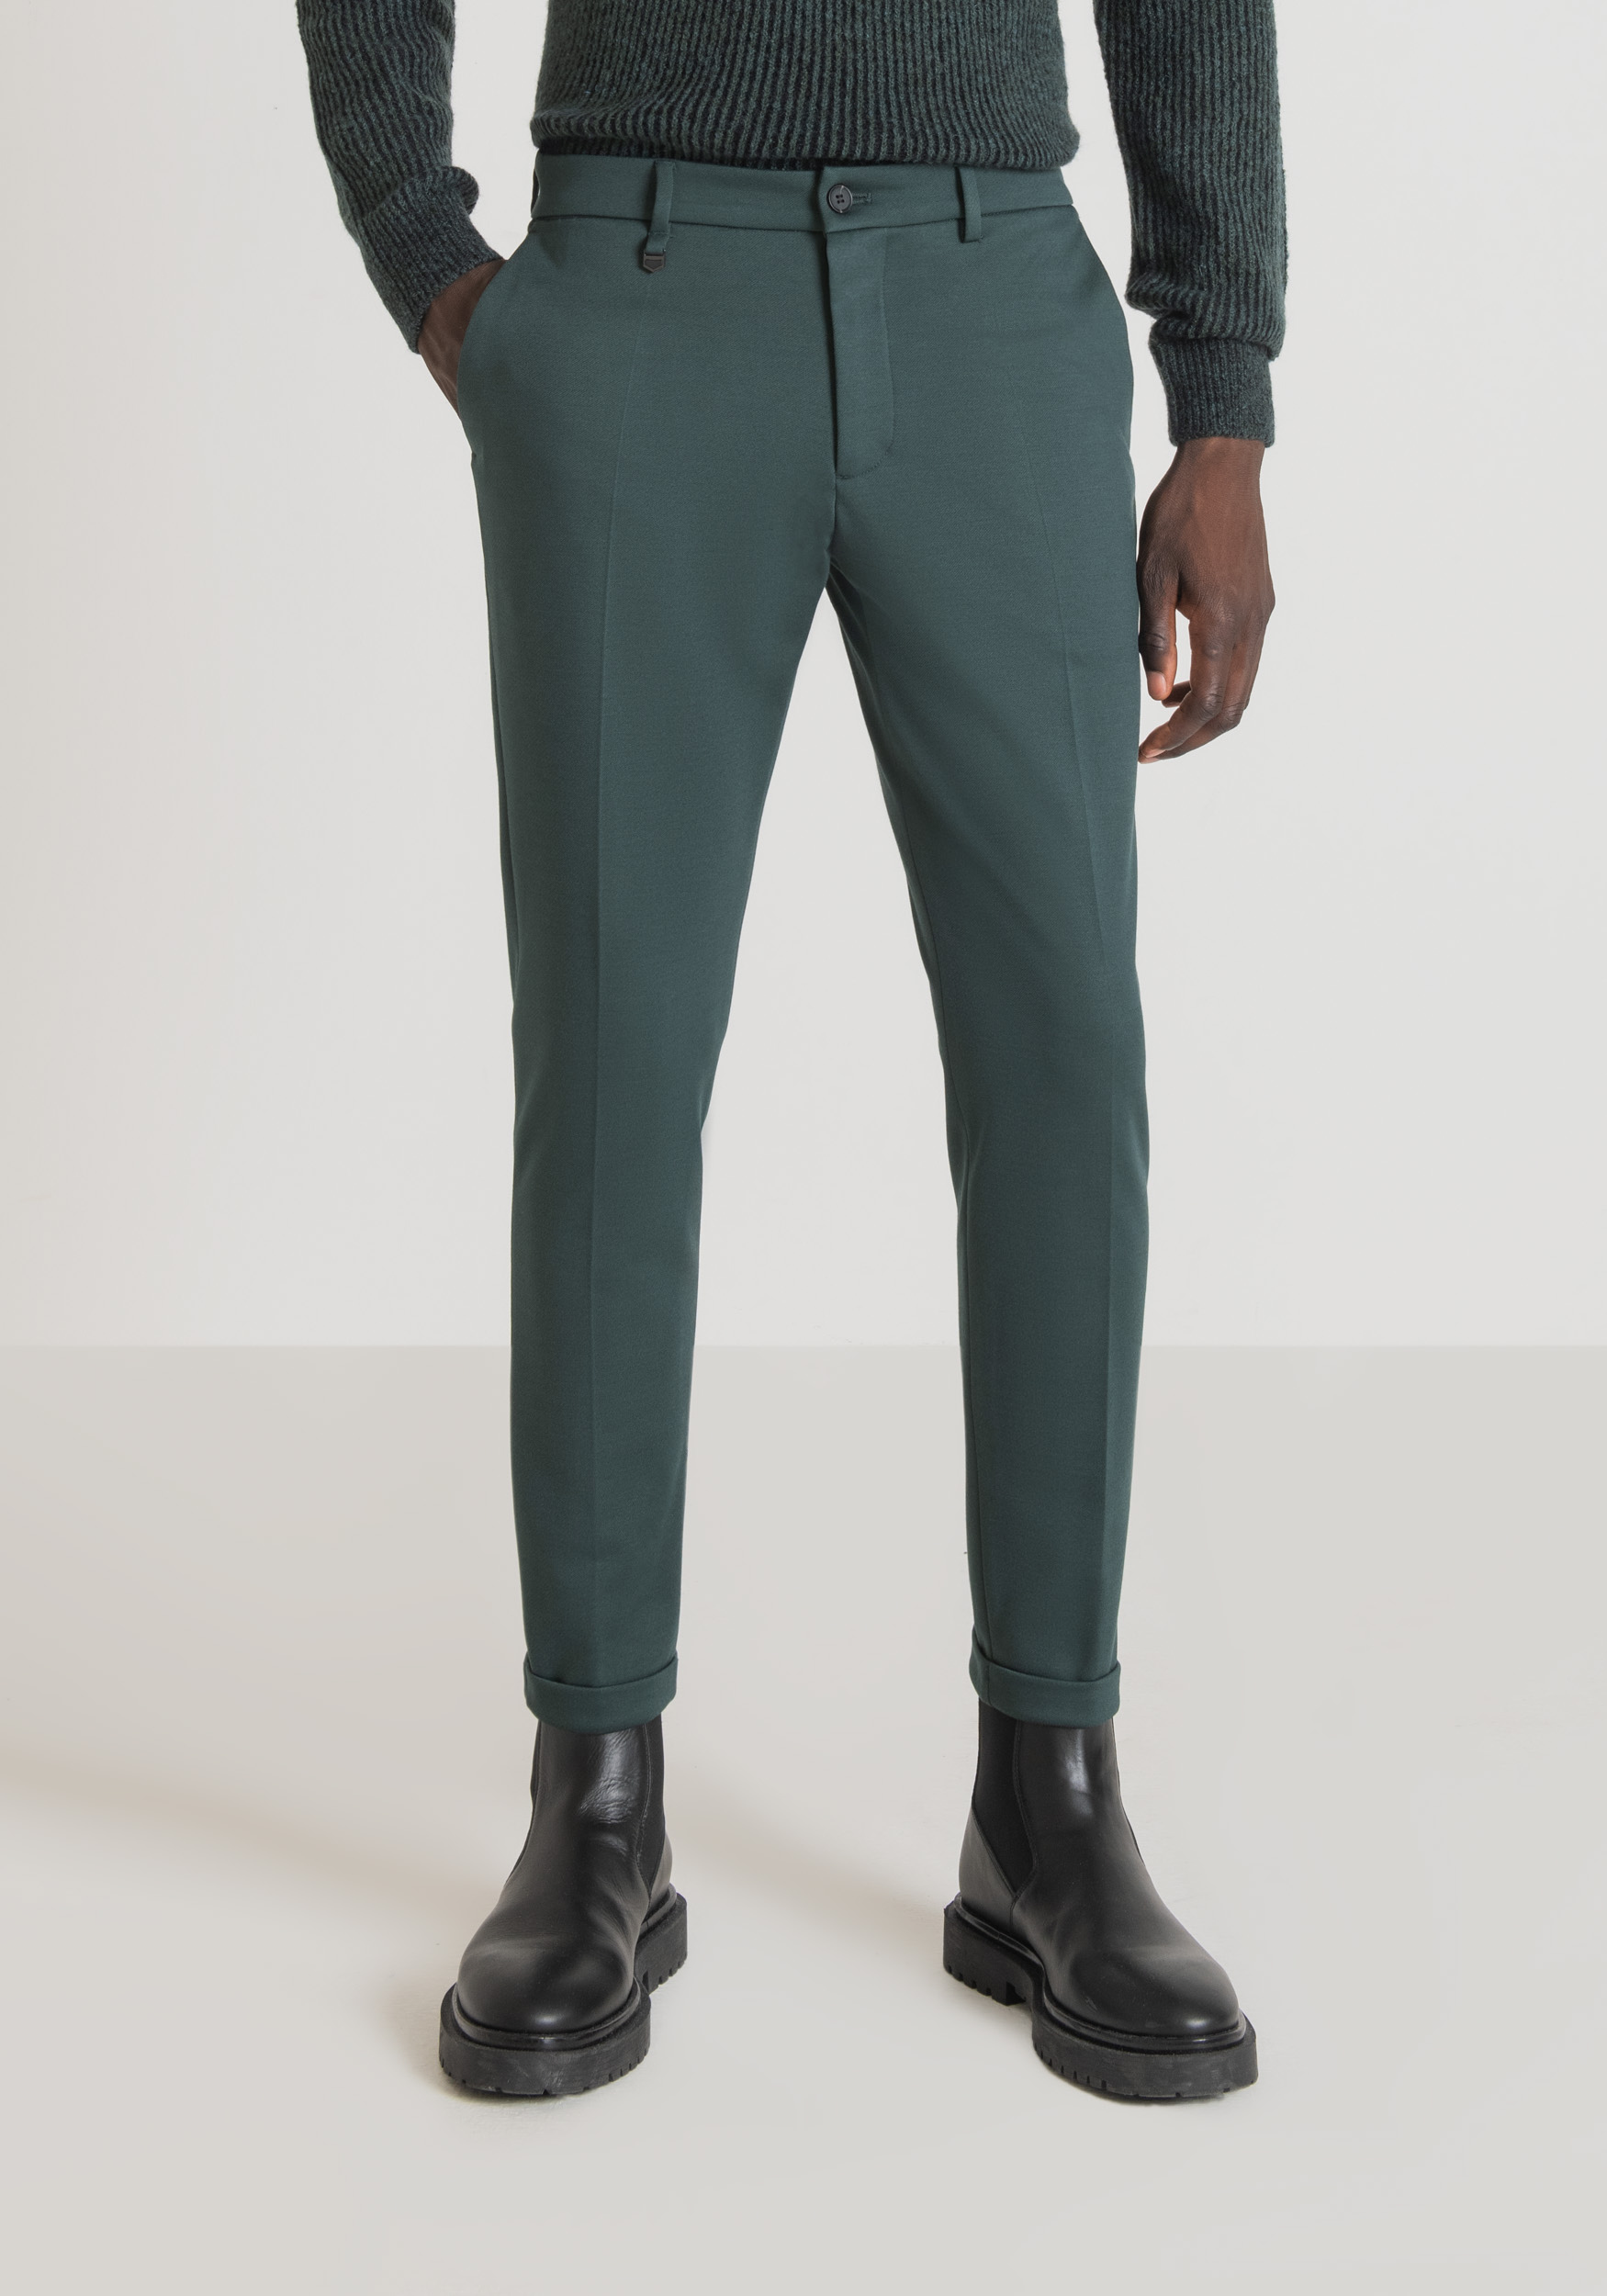 Antony Morato Pantalon Super Skinny Fit Ashe En Serge De Viscose Melangee Stretch Bouteille Verte | Homme Pantalons